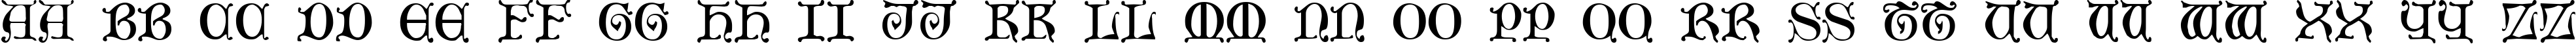 Пример написания английского алфавита шрифтом Aneirin